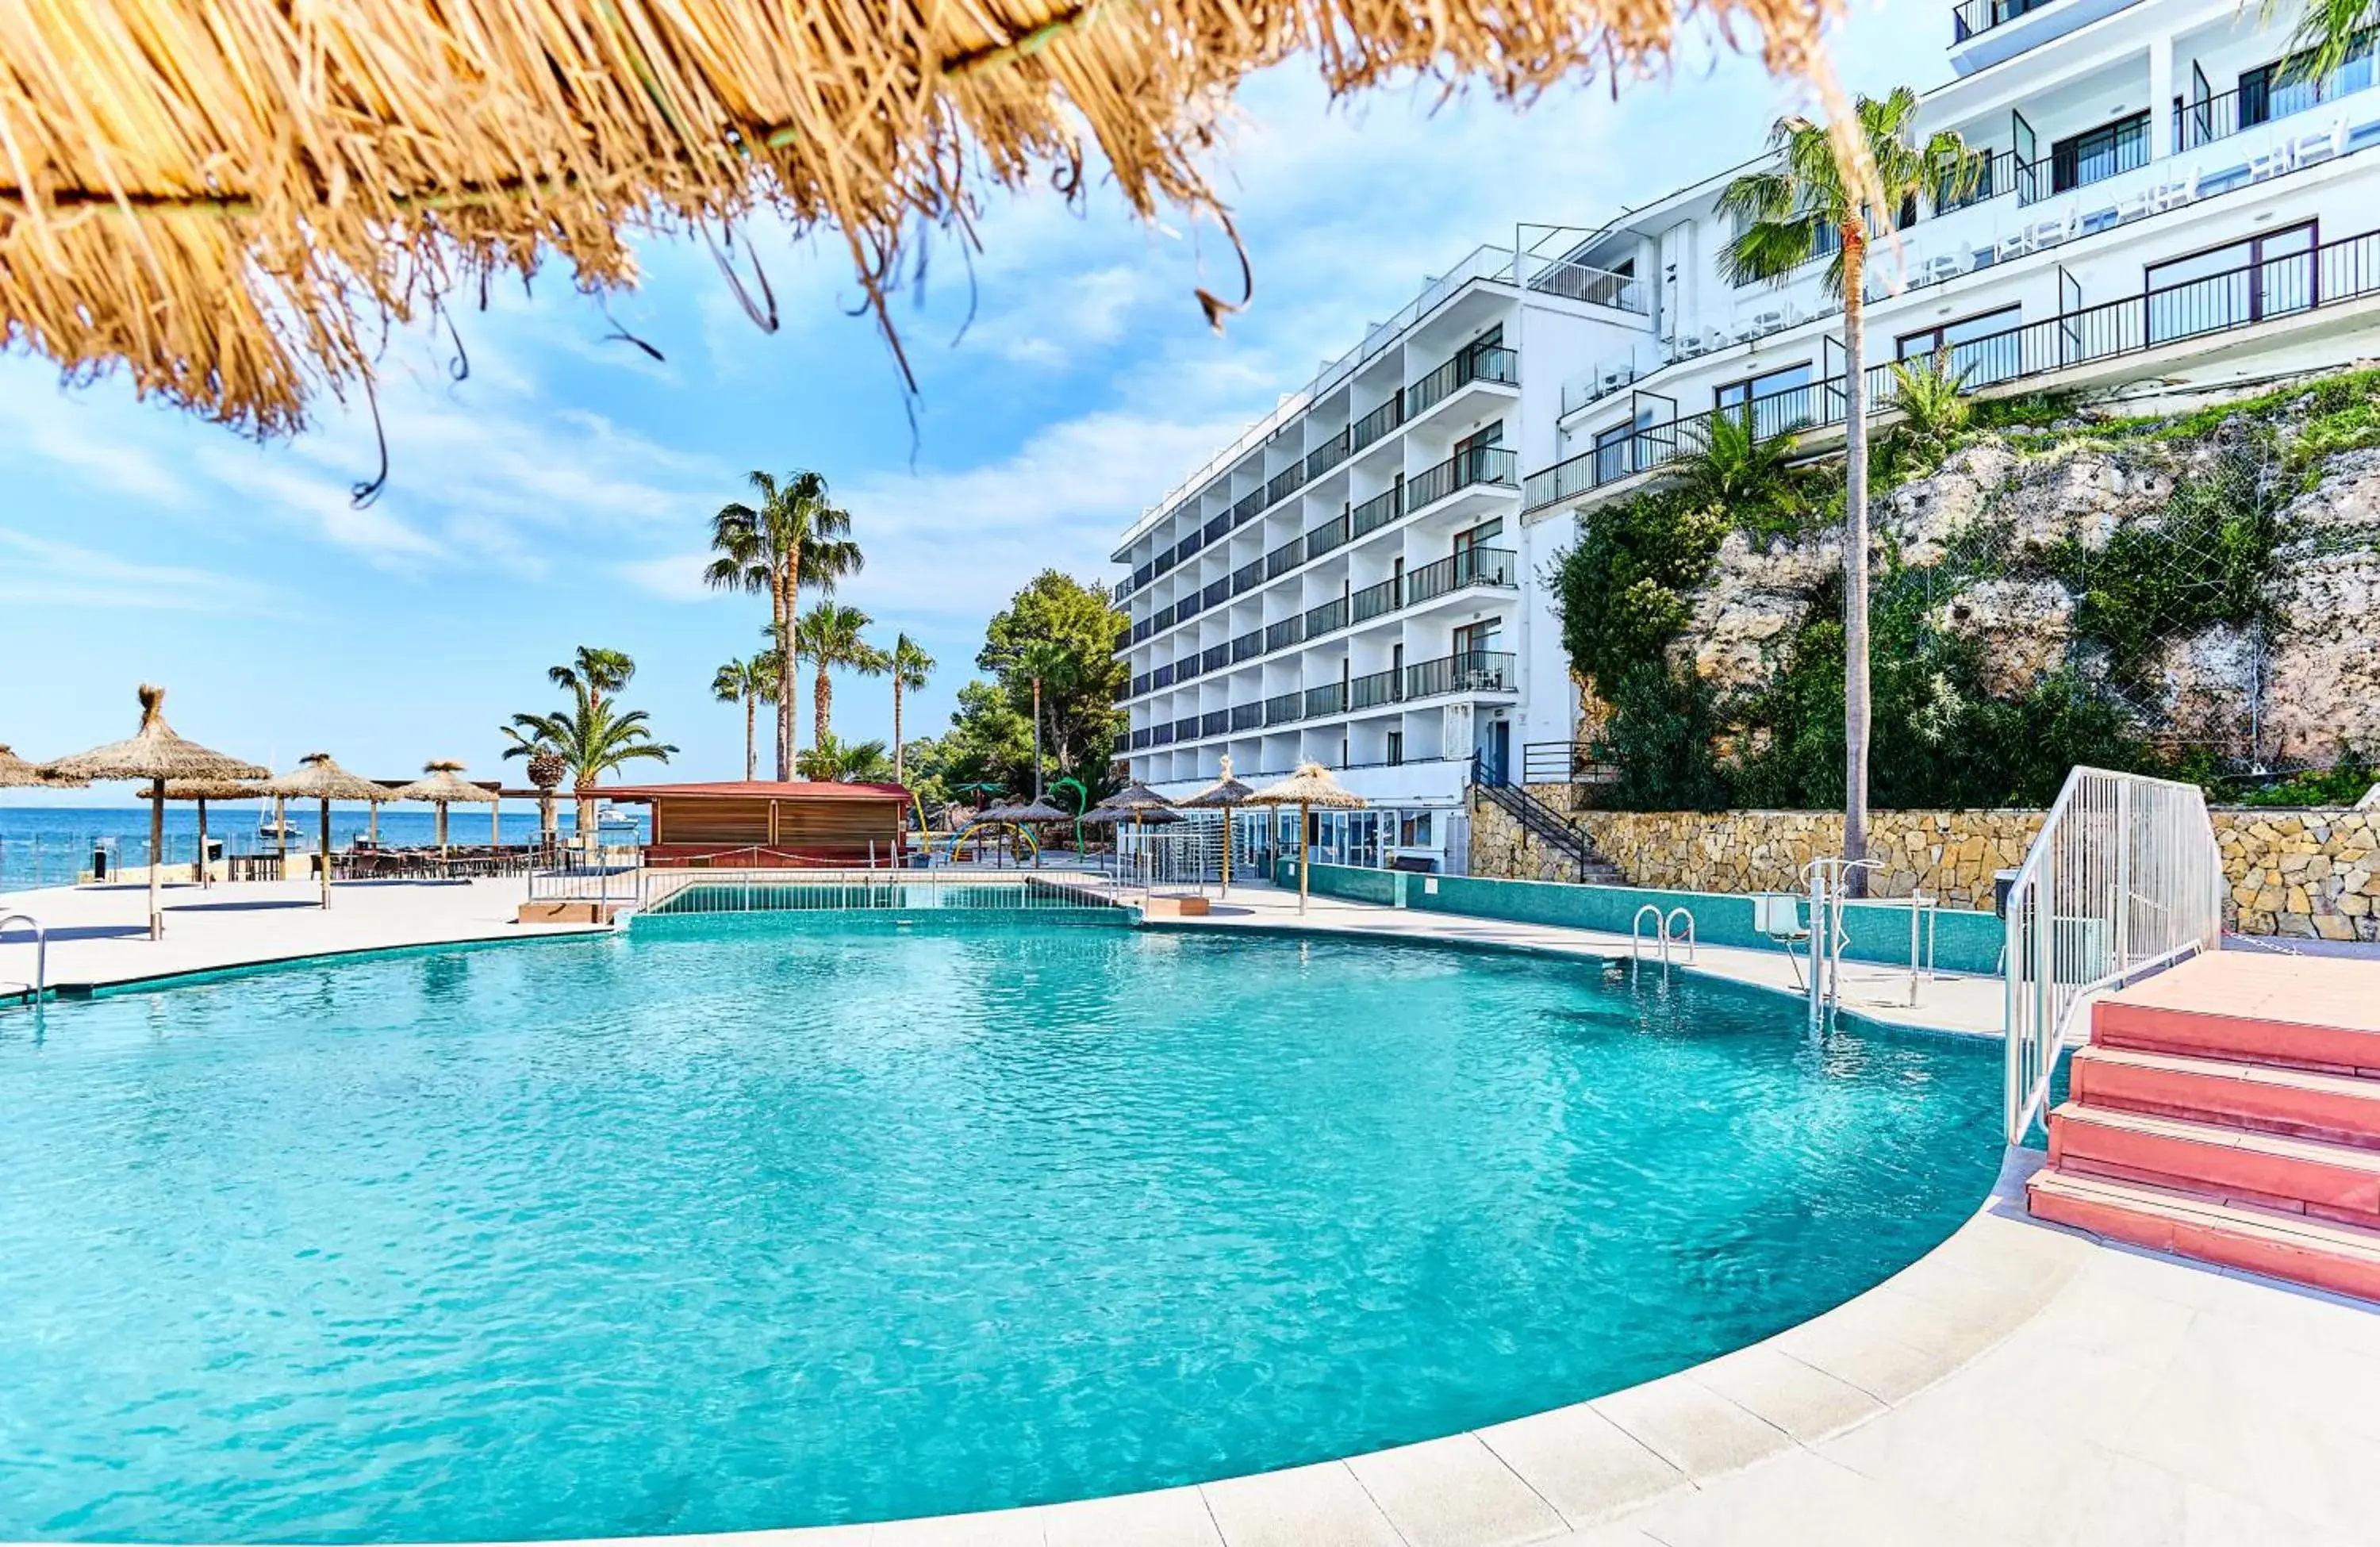 Swimming Pool in Leonardo Royal Hotel Mallorca